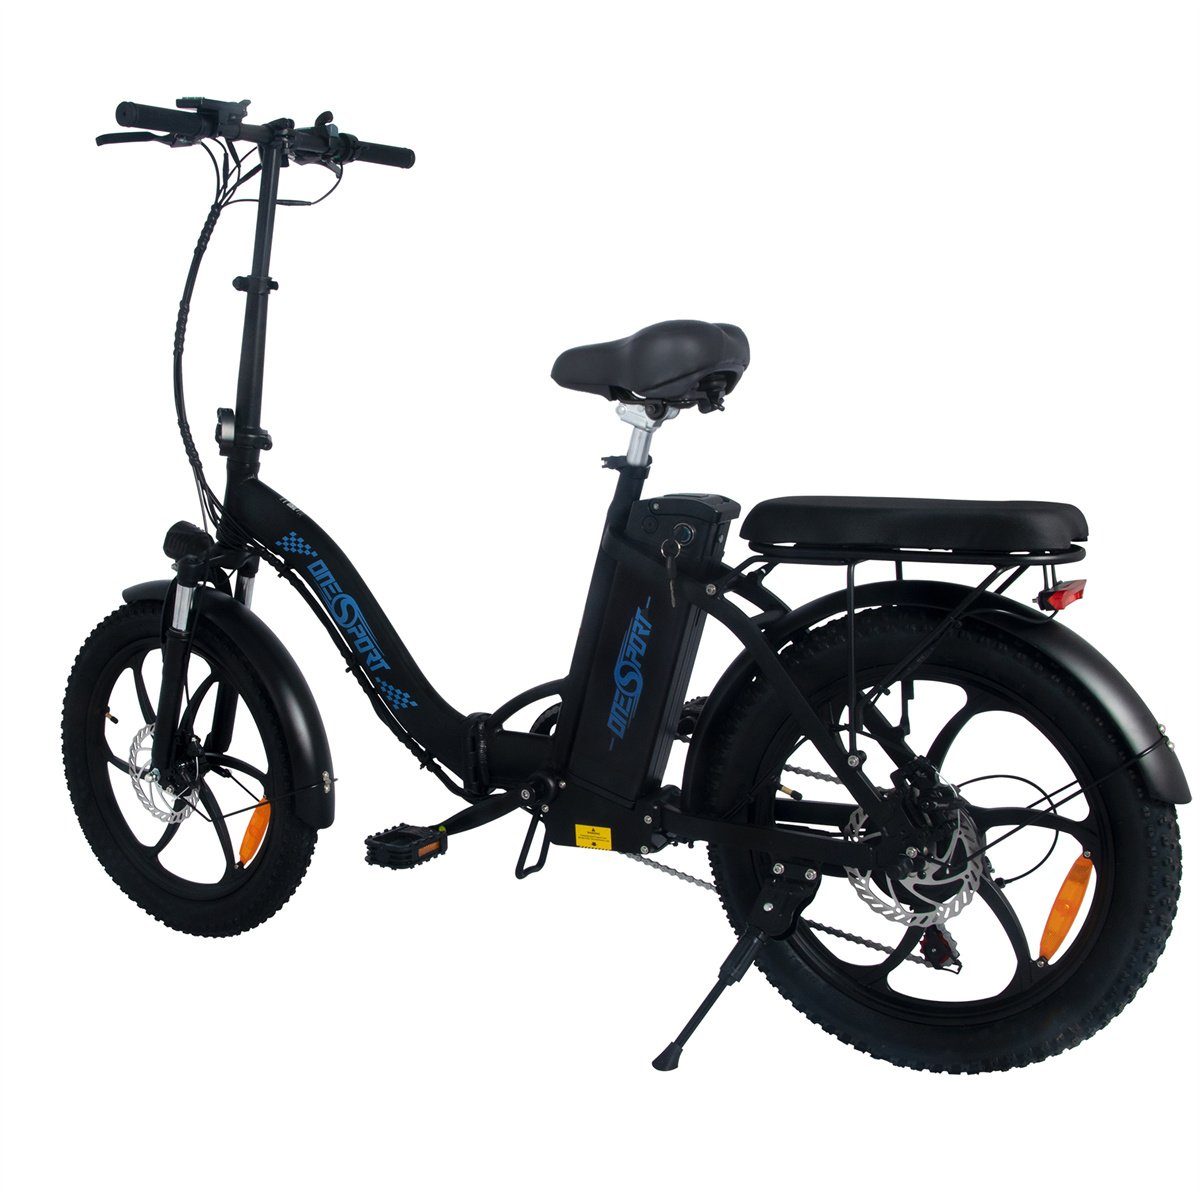 Heckmotor 20Zoll E-bike, 480Wh,250W Shimano 7-Gang,48V Fangqi Heckmotor, E-Bike 25km/h, max